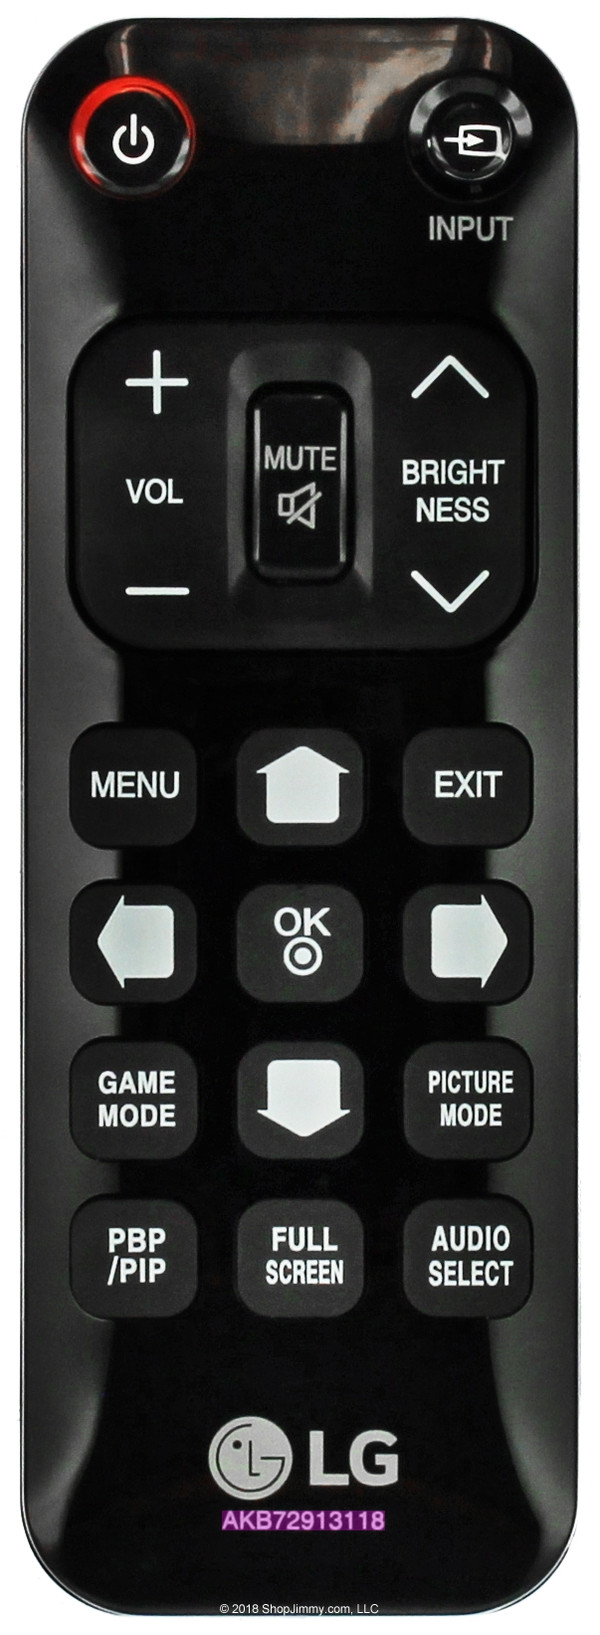 LG AKB72913118 Remote Control - Open Bag